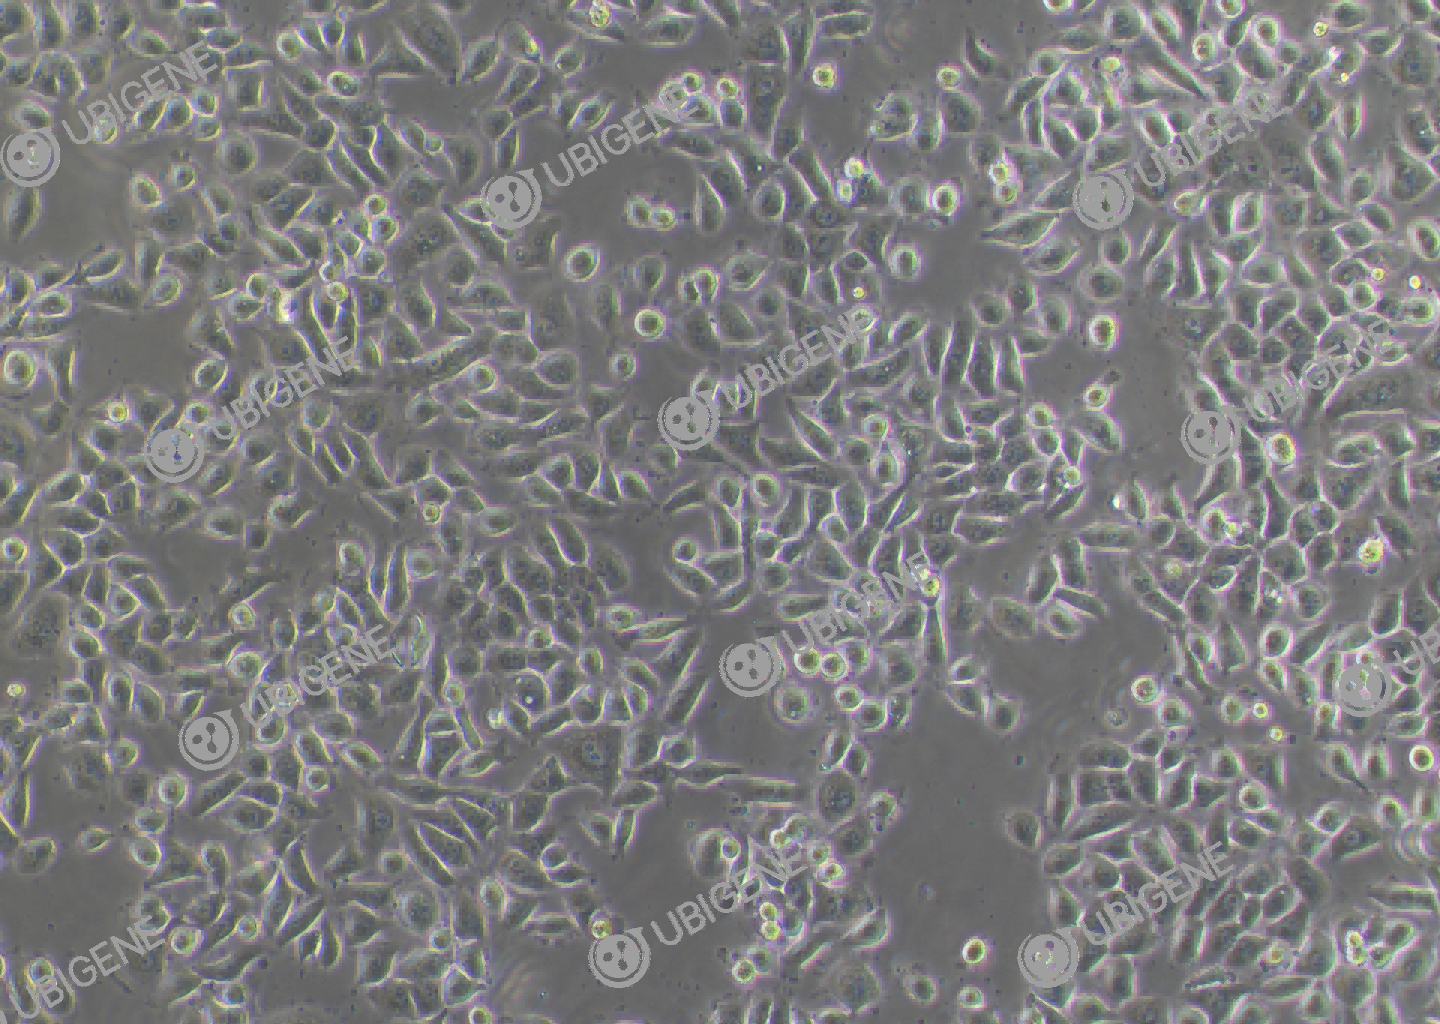 HK-1 cell line Cultured cell morphology